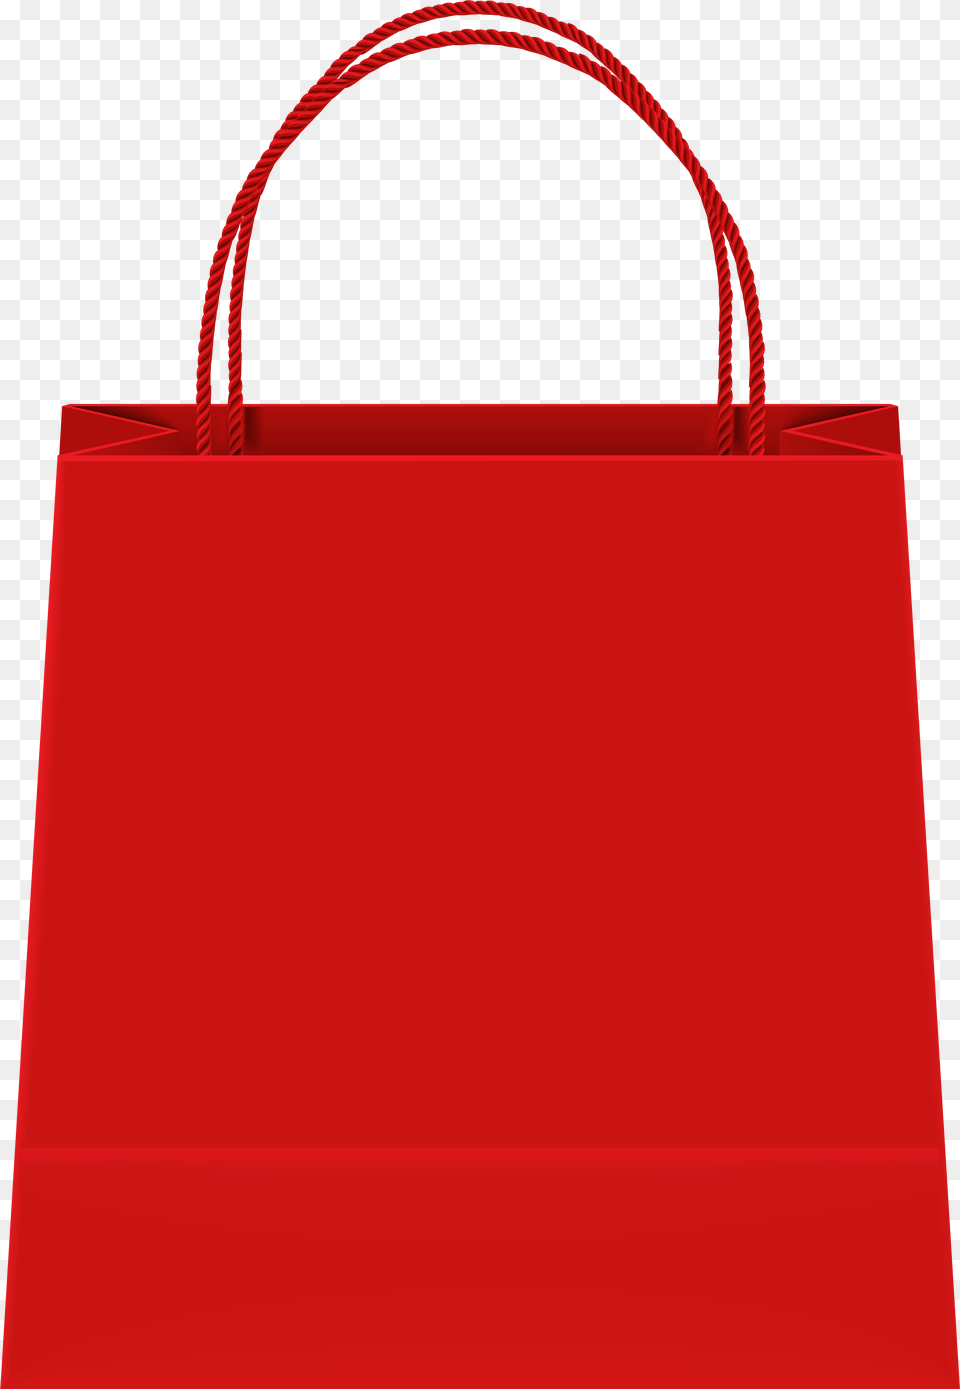 Bag Clipart Gift Gift Bag Clipart, Accessories, Handbag, Purse, Tote Bag Free Png Download